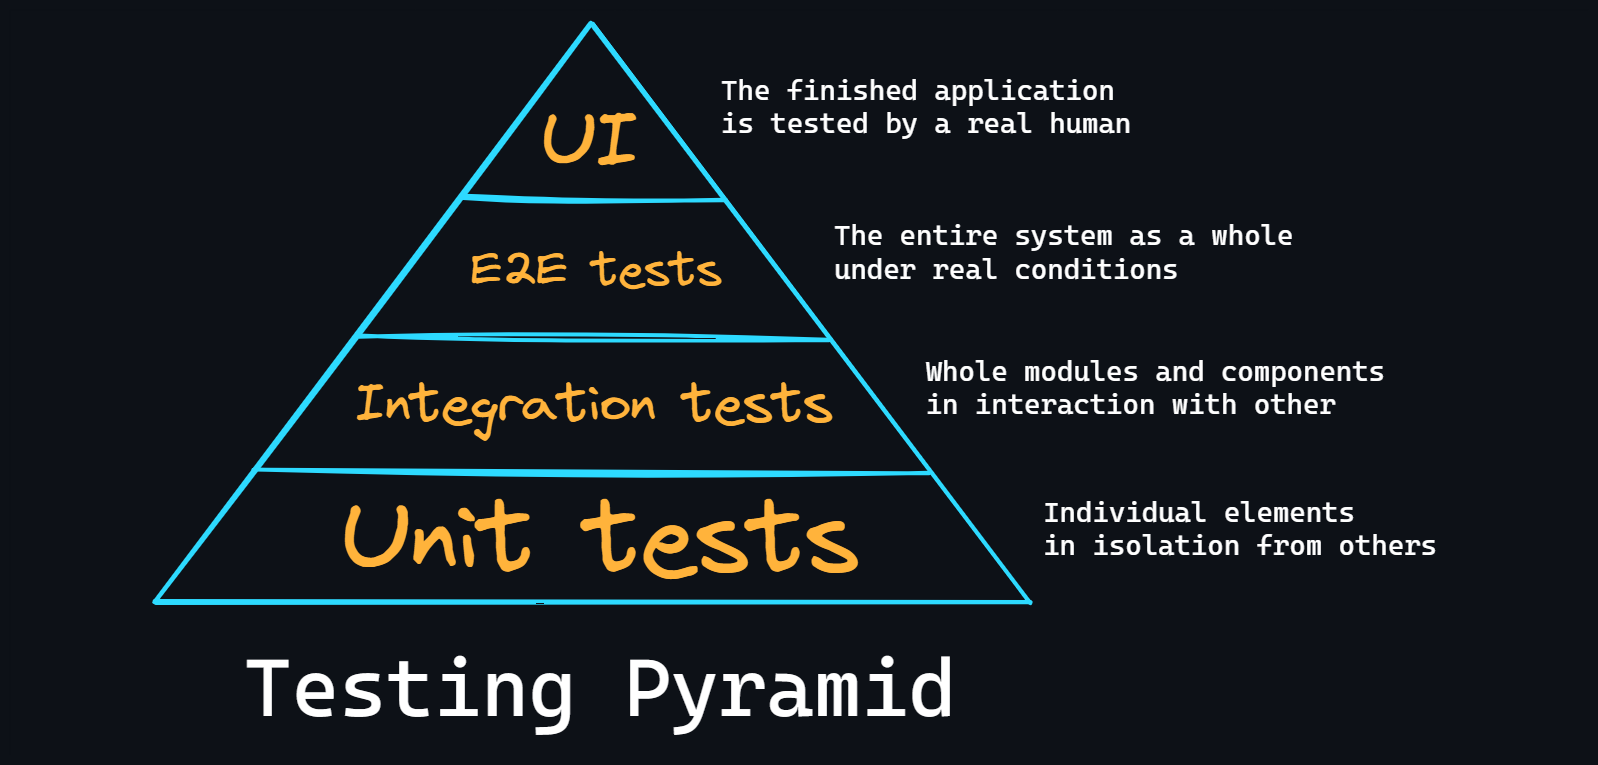 Testing pyramid